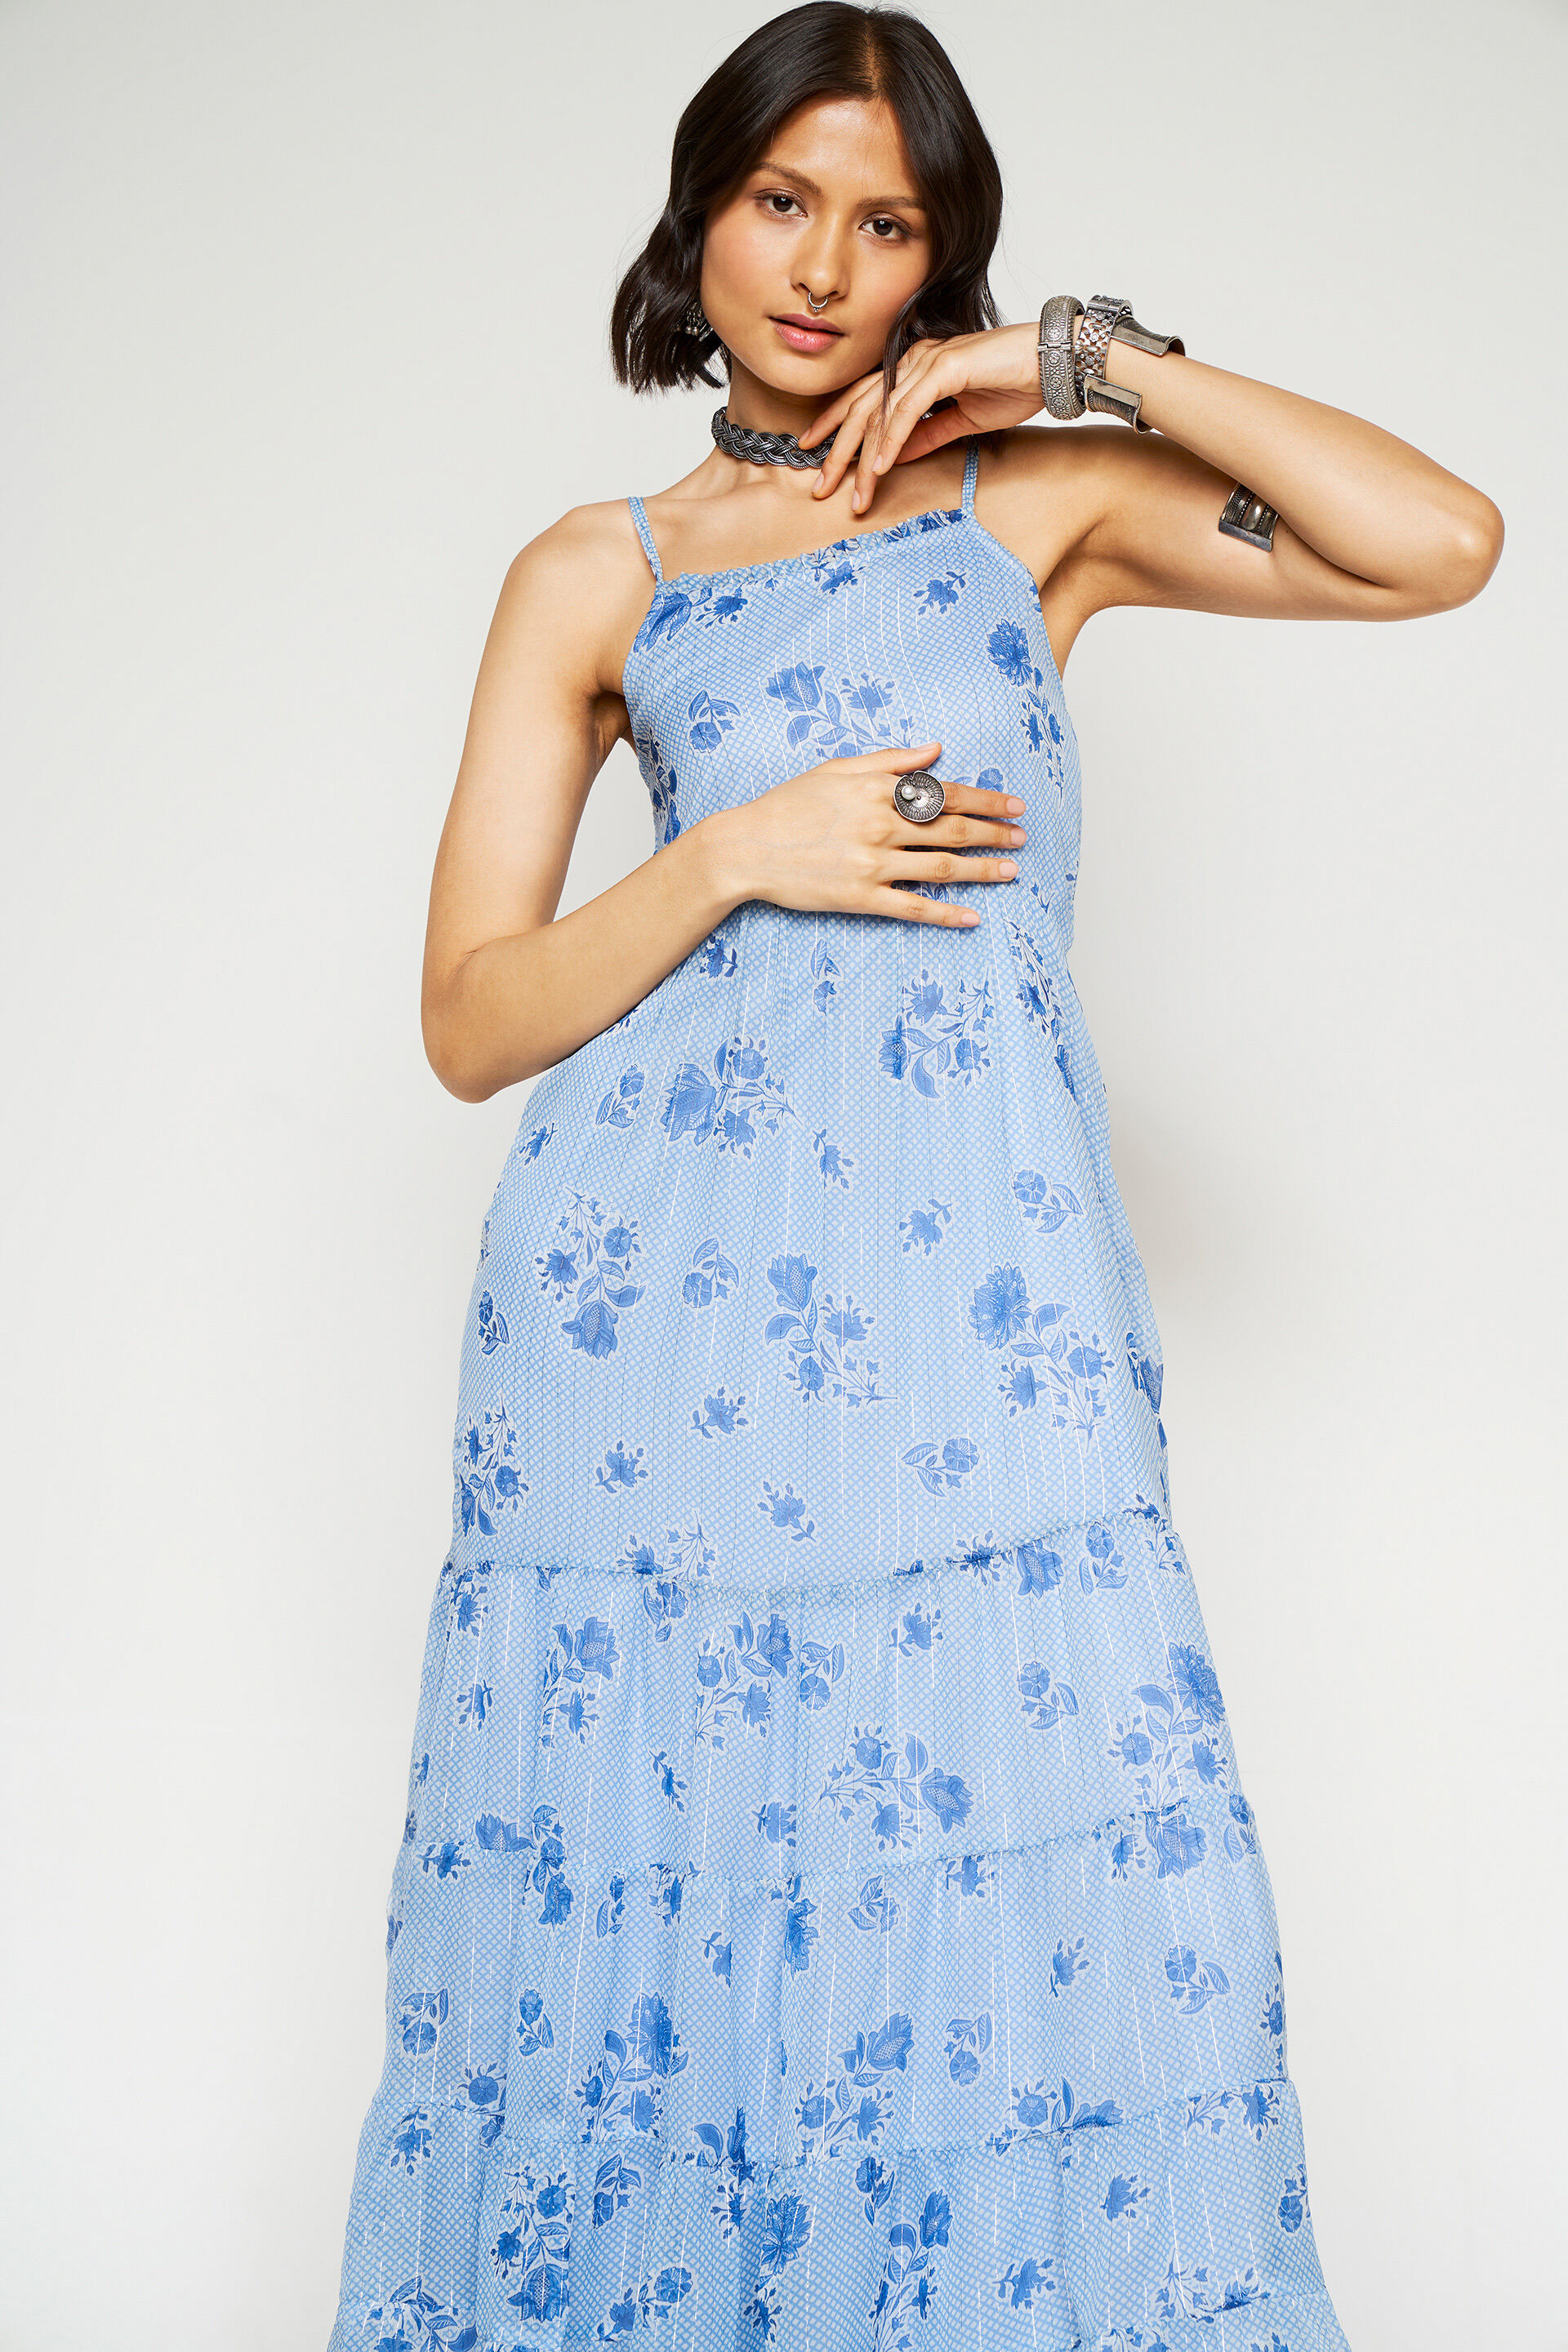 Strapless Navy Blue Long Party Dresses for Prom Online – loveangeldress